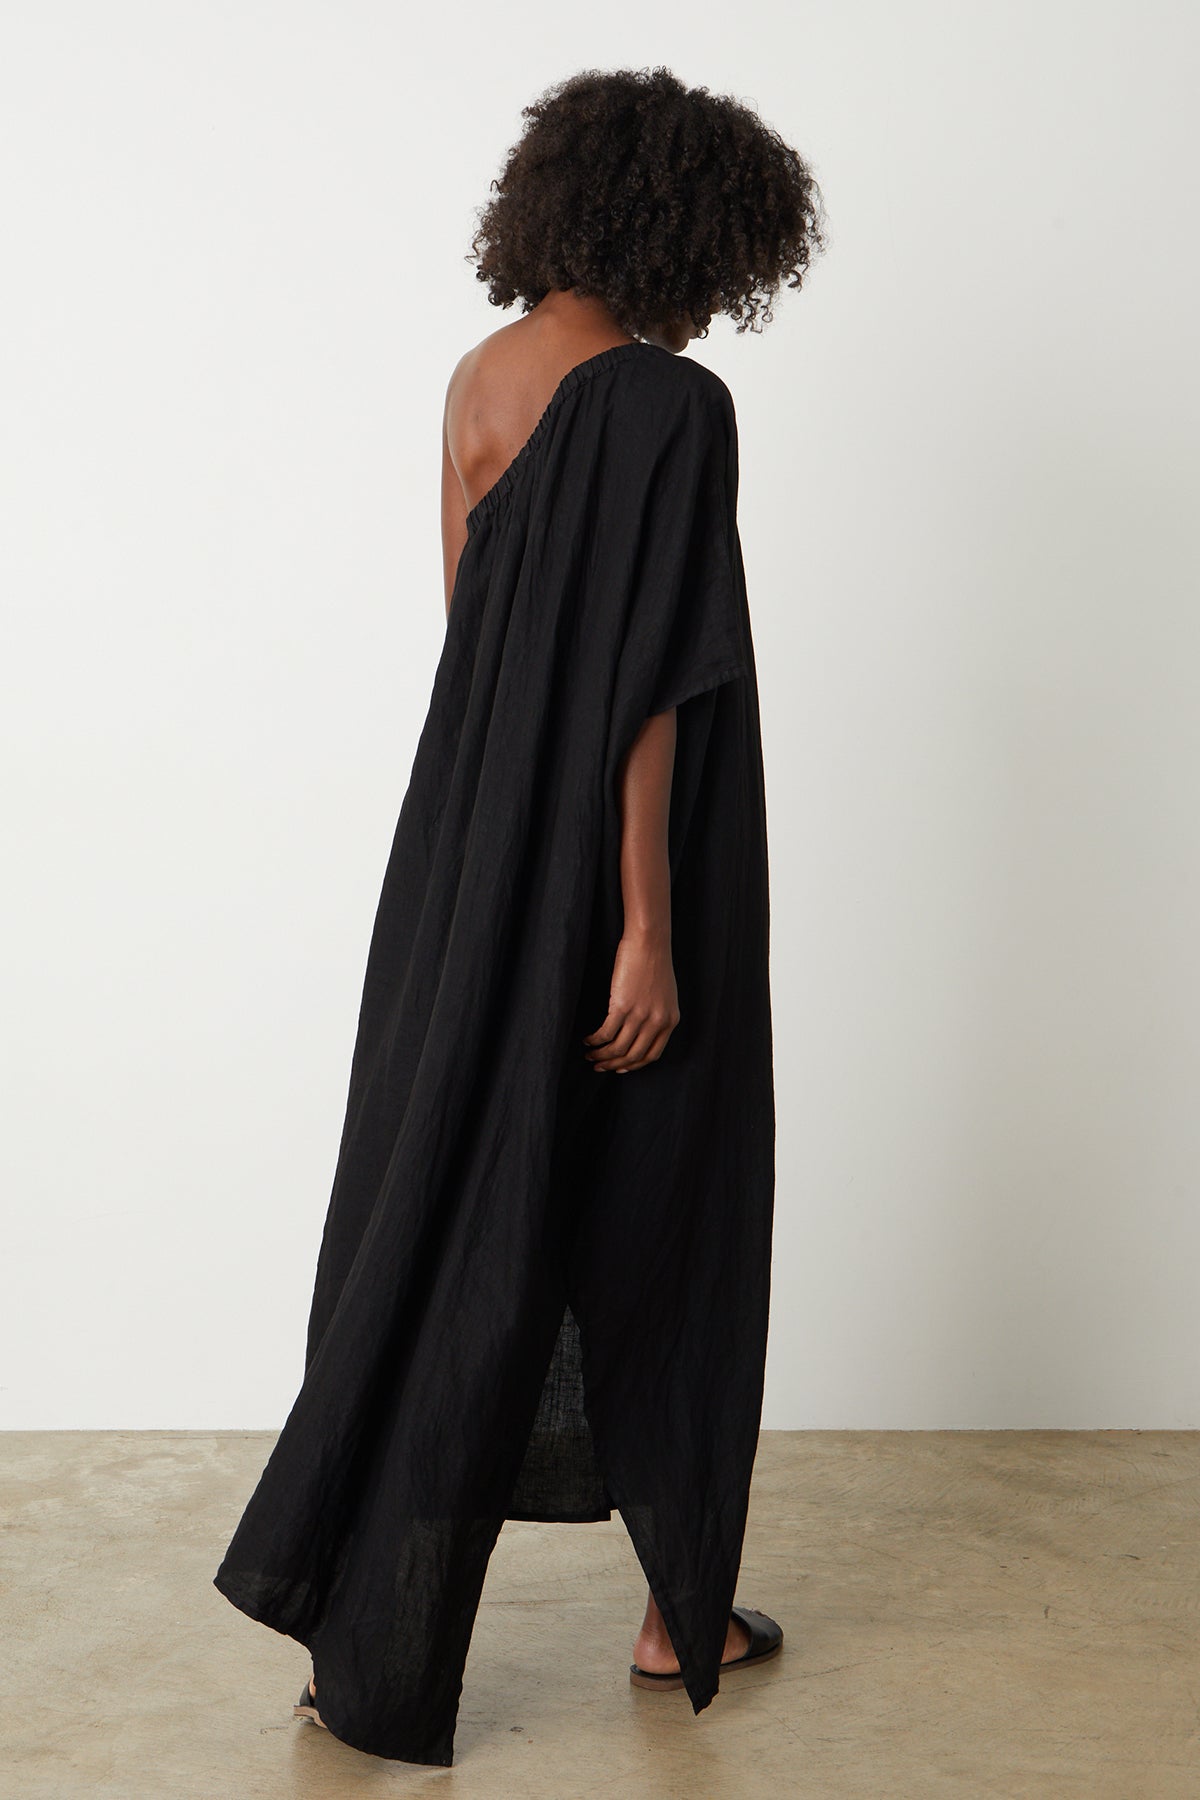   Andrea Linen Dress in black with black slides full length back & side 